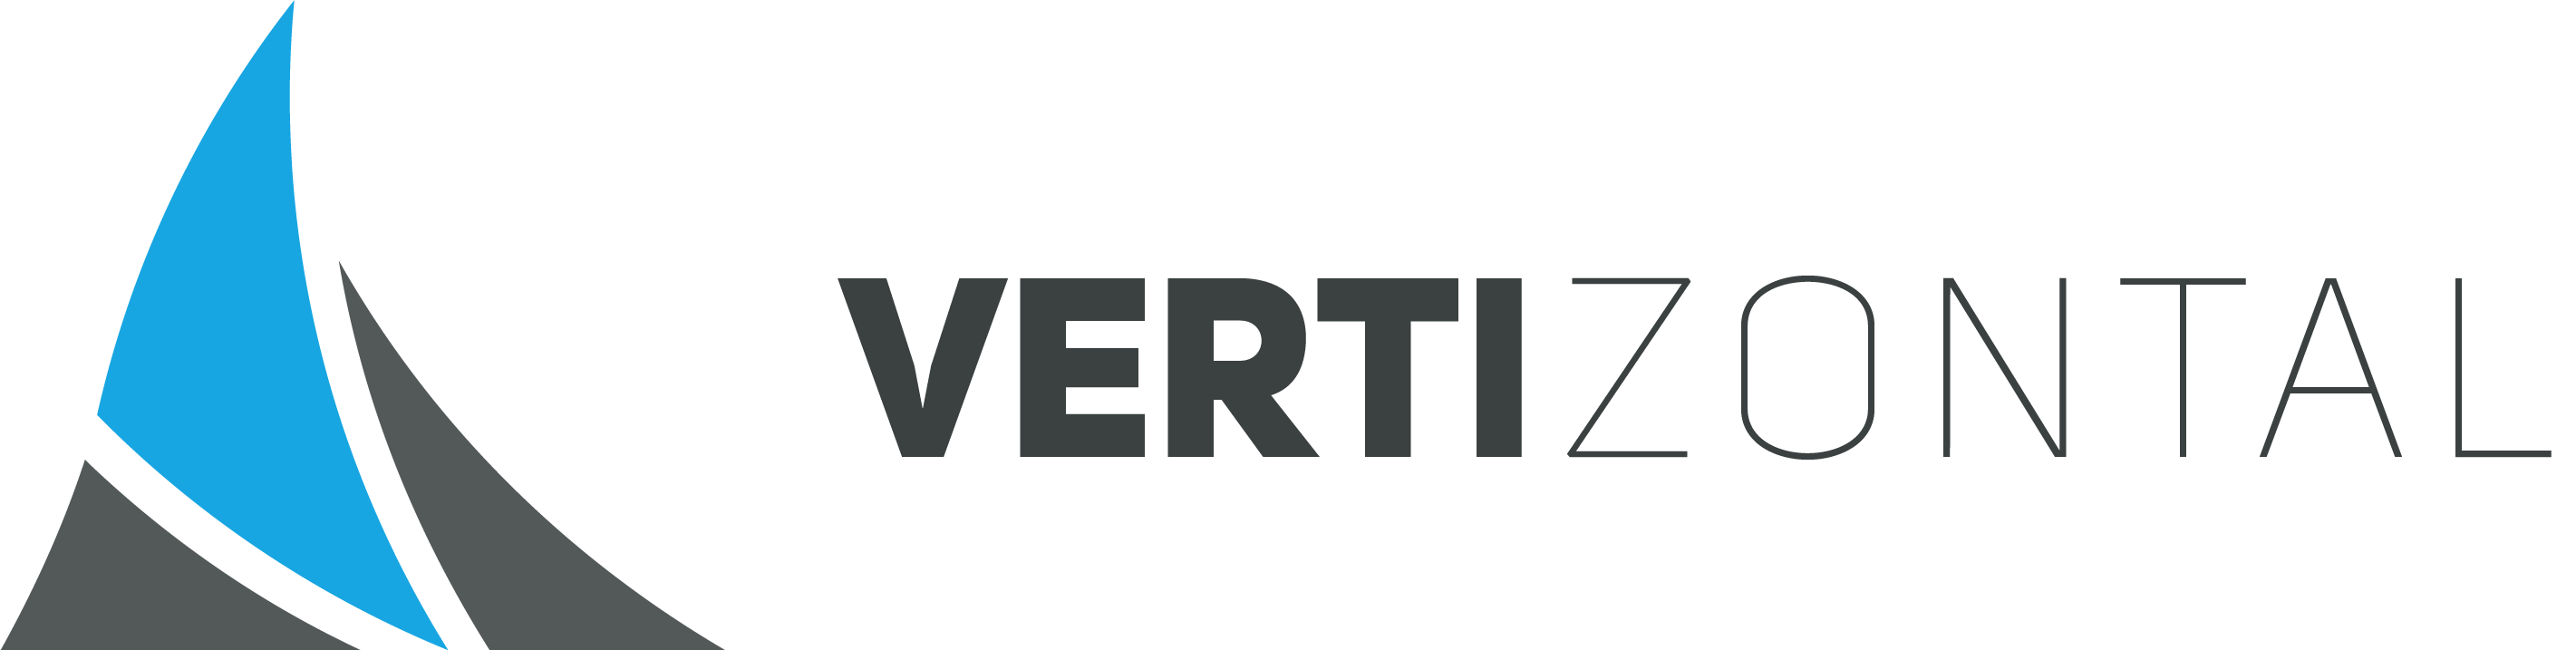 vertizontal